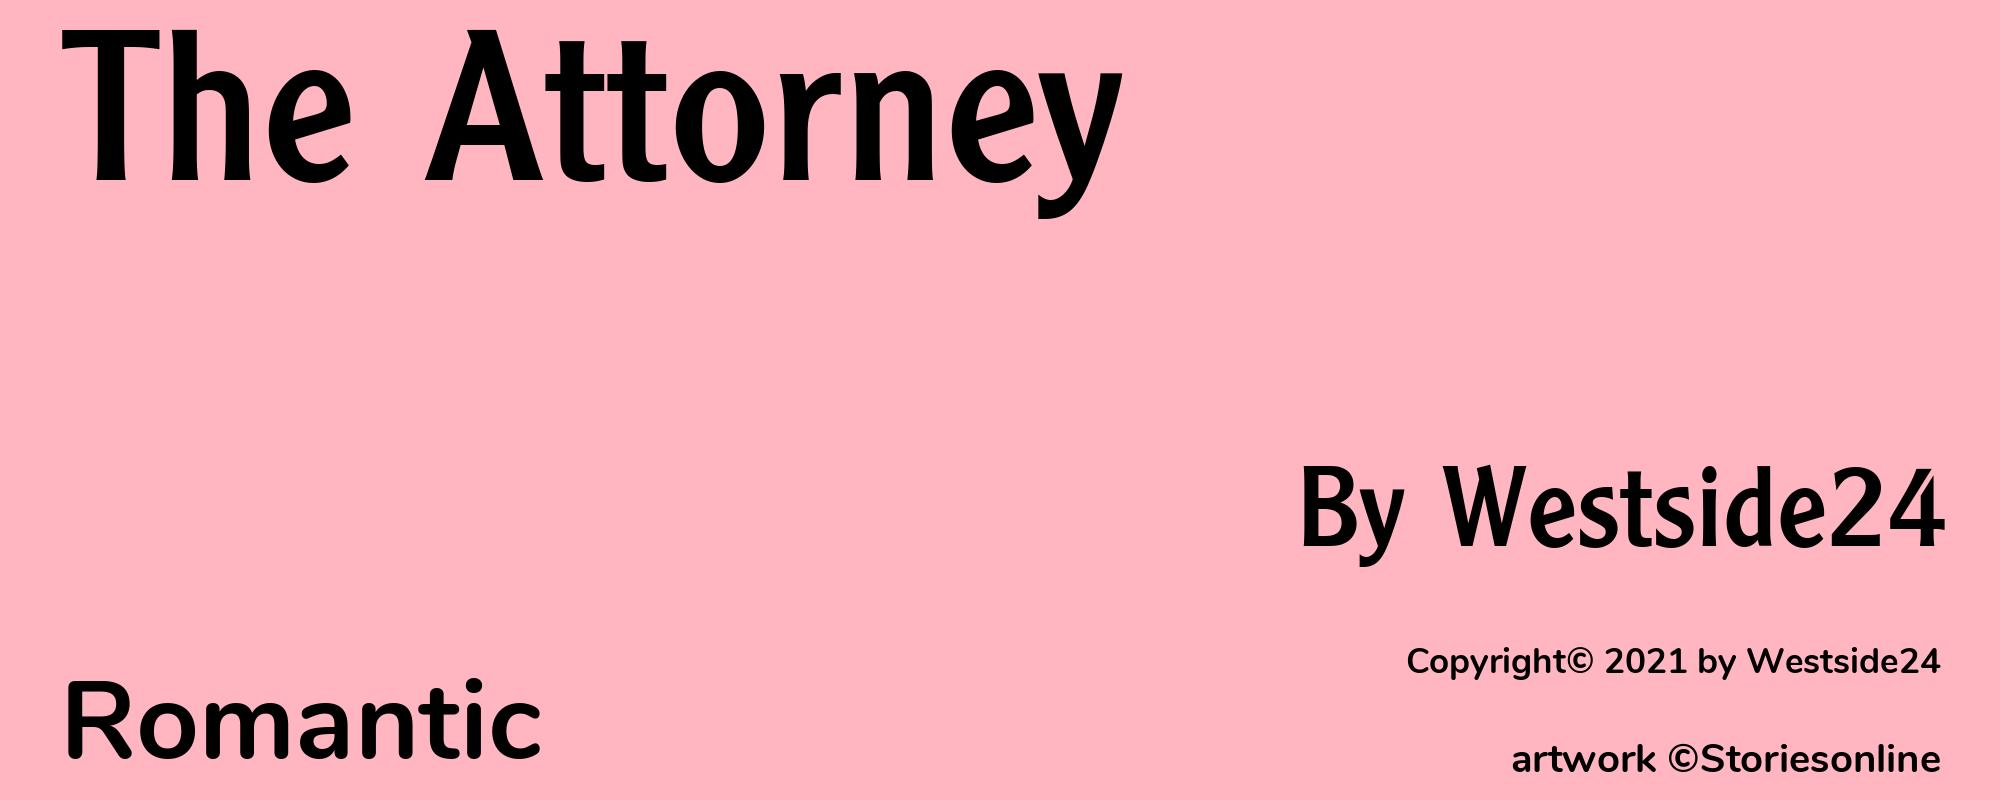 The Attorney - Cover